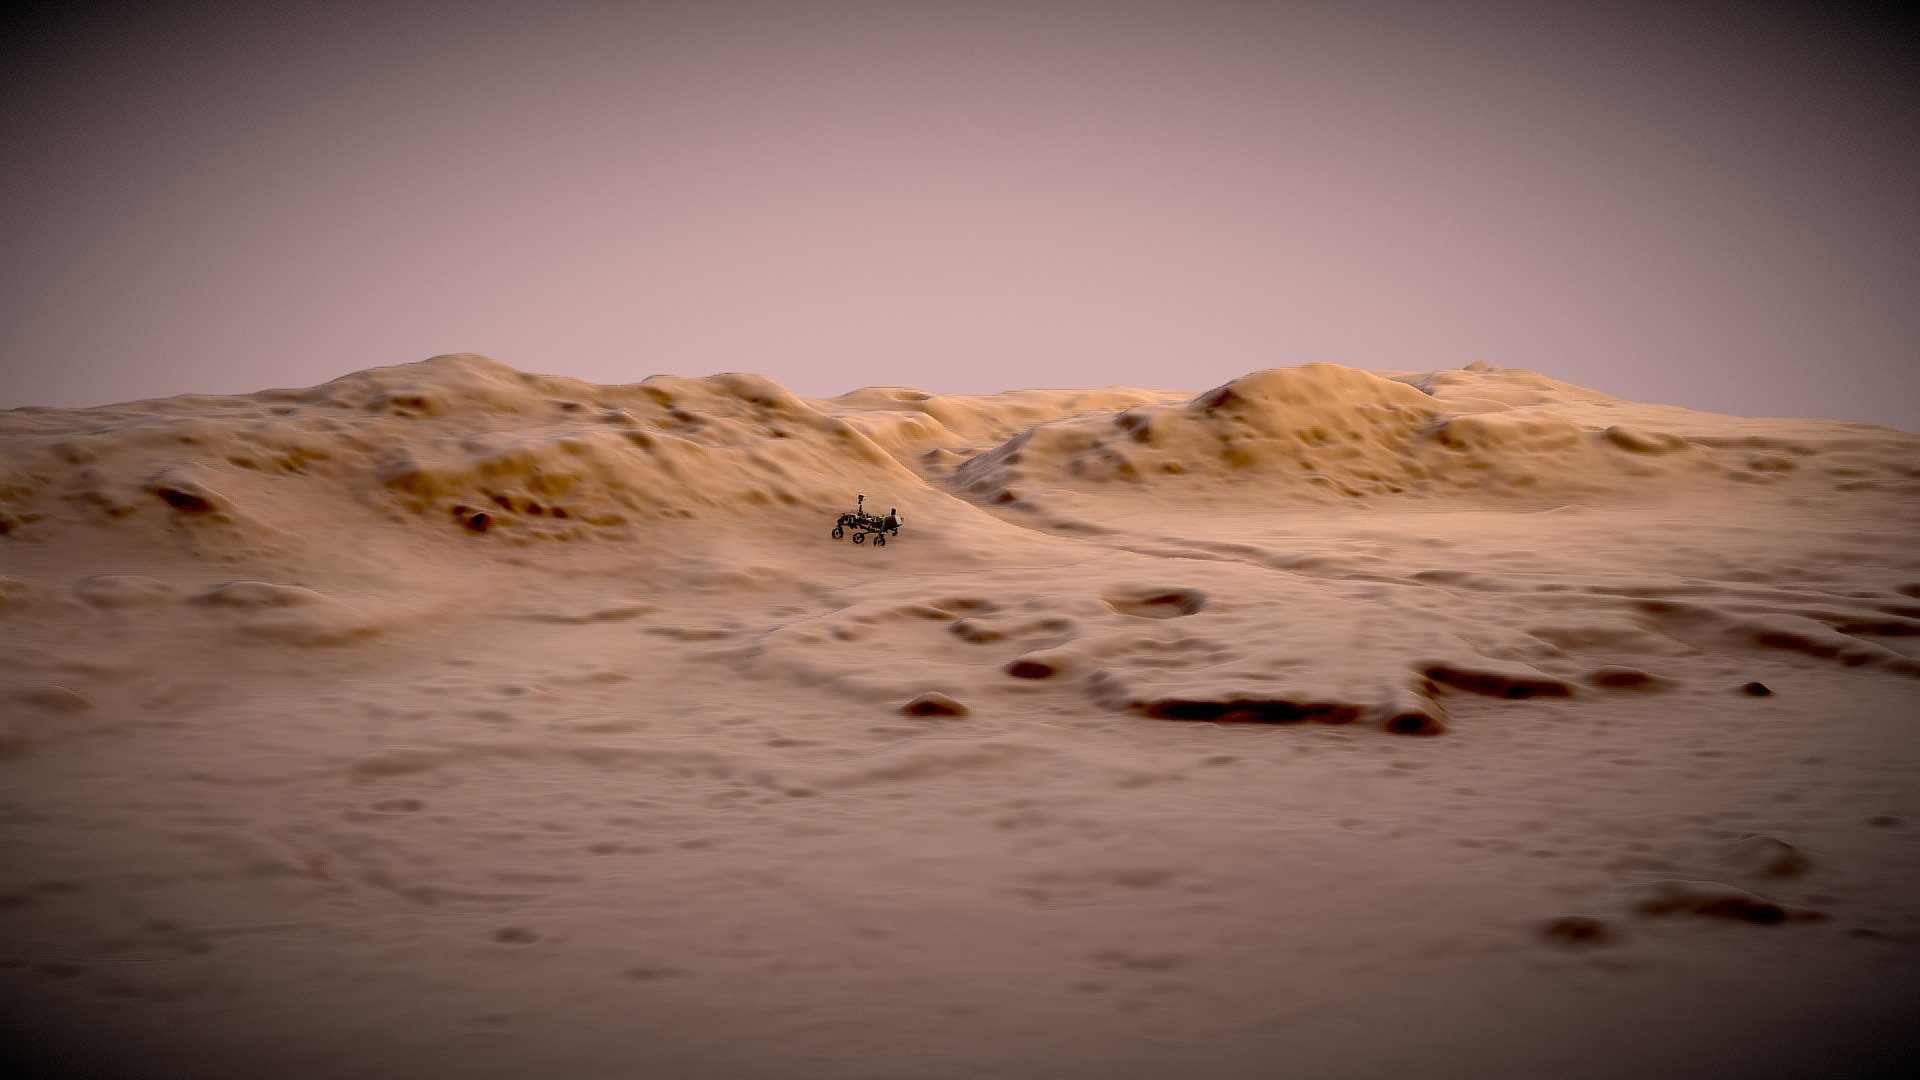 Mars - Perseverance rover - Animation